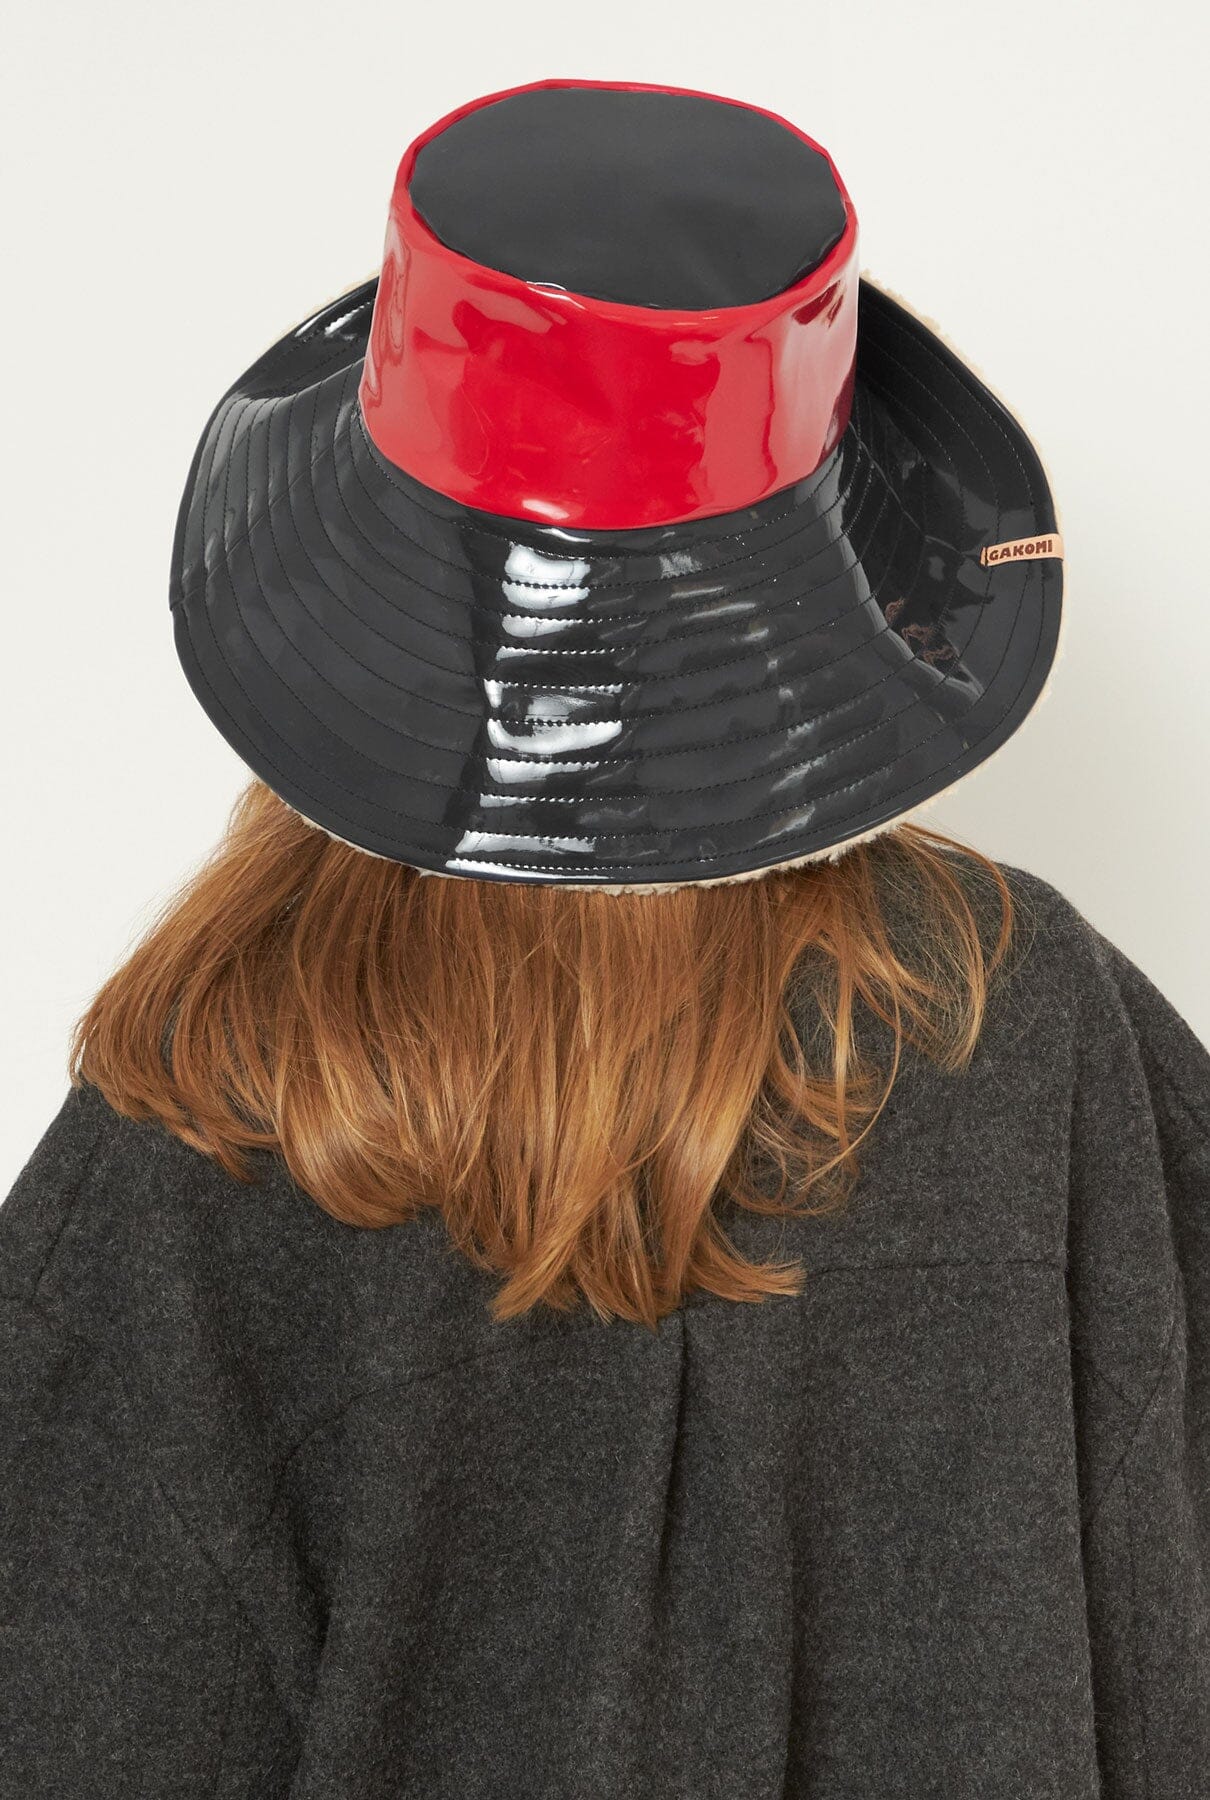 Charolito L bicolour black-red hat Hats Gakomi 